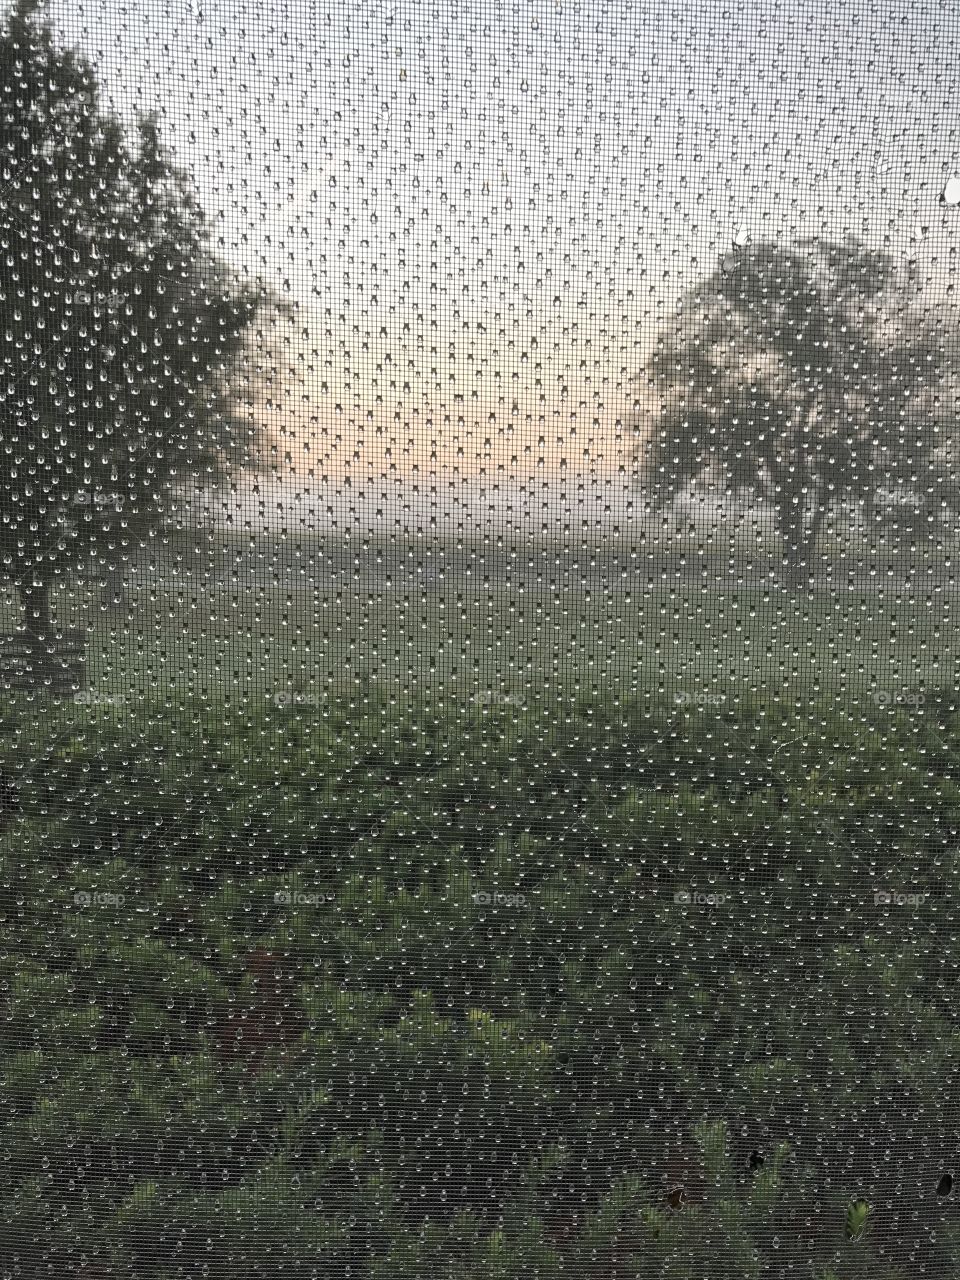 Foggy wet morning in Illinois 